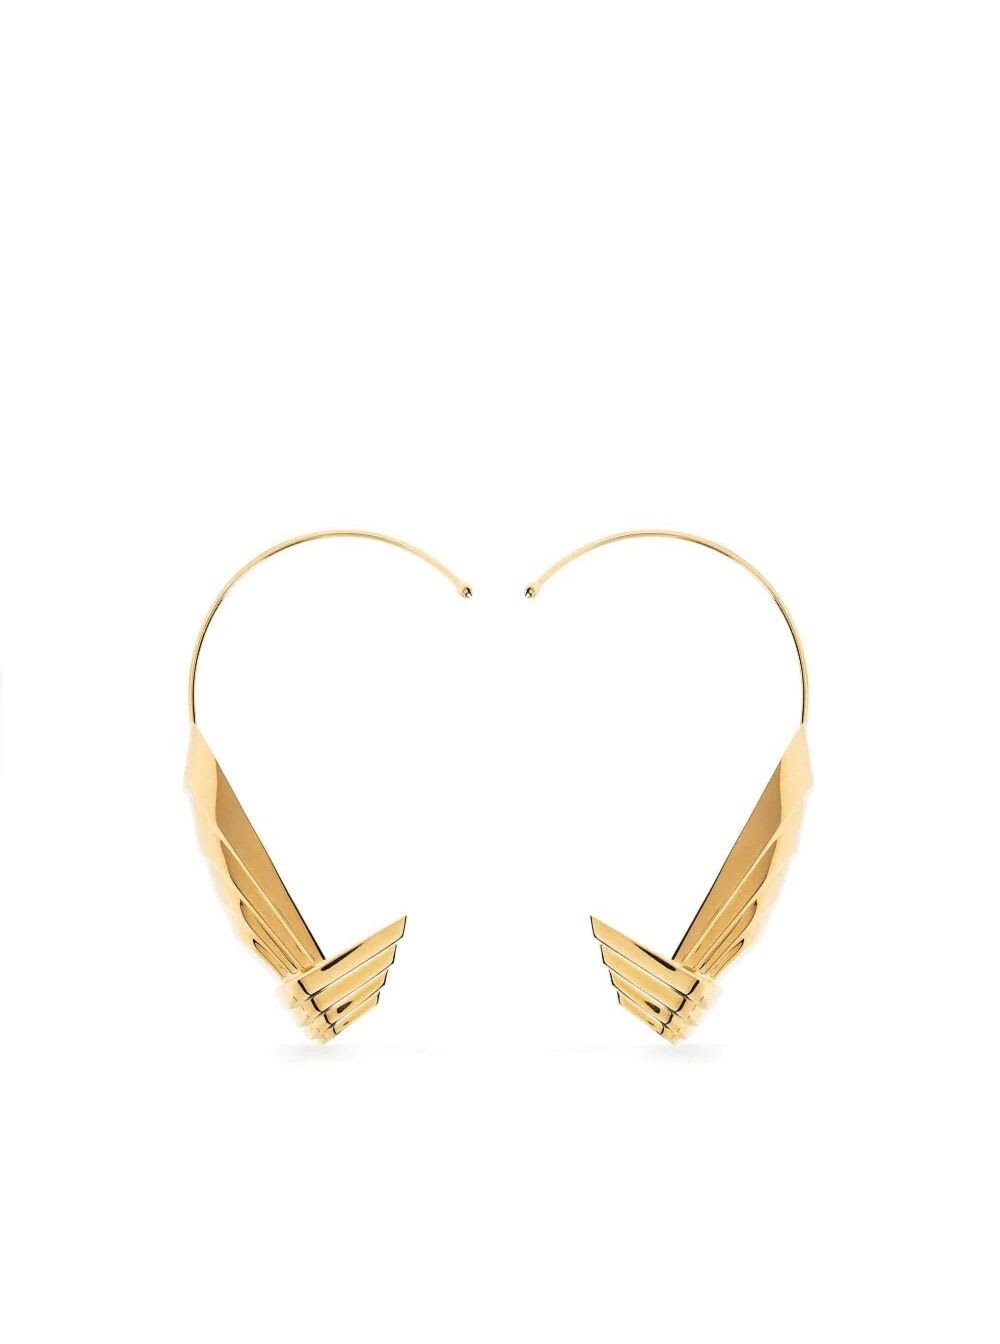 Leda Madera Susan Golden Brass Earrings